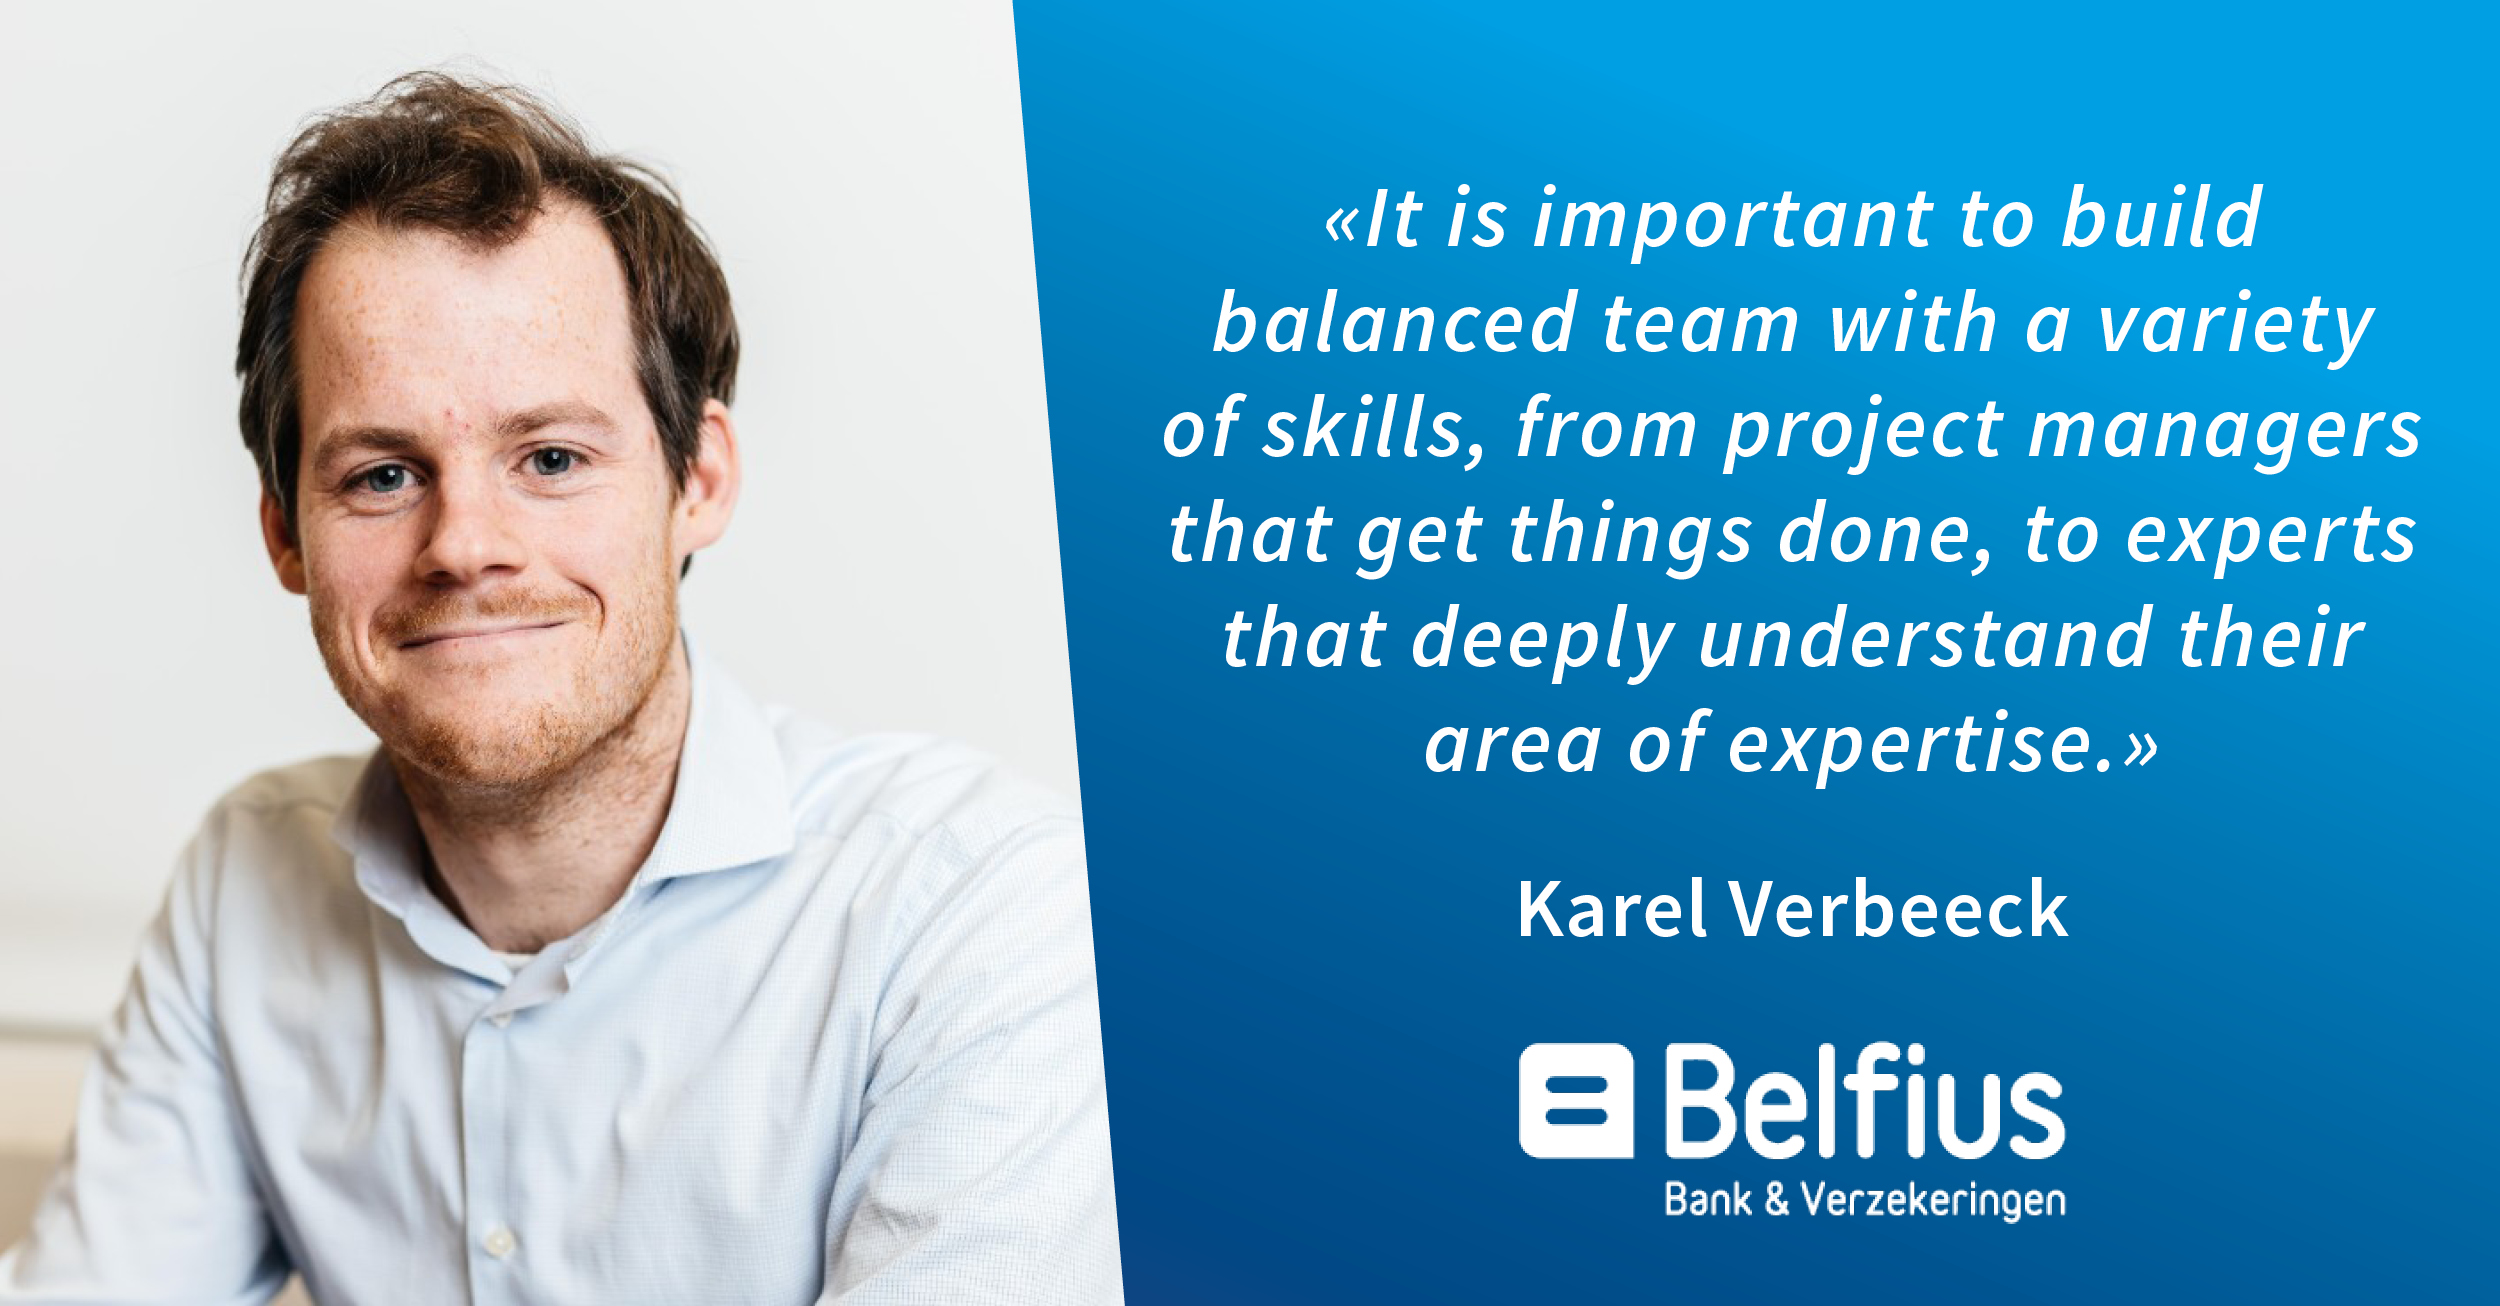 Interview with Karel Verbeeck, Domain Director Mobility & Actuarial team at Belfius Insurance